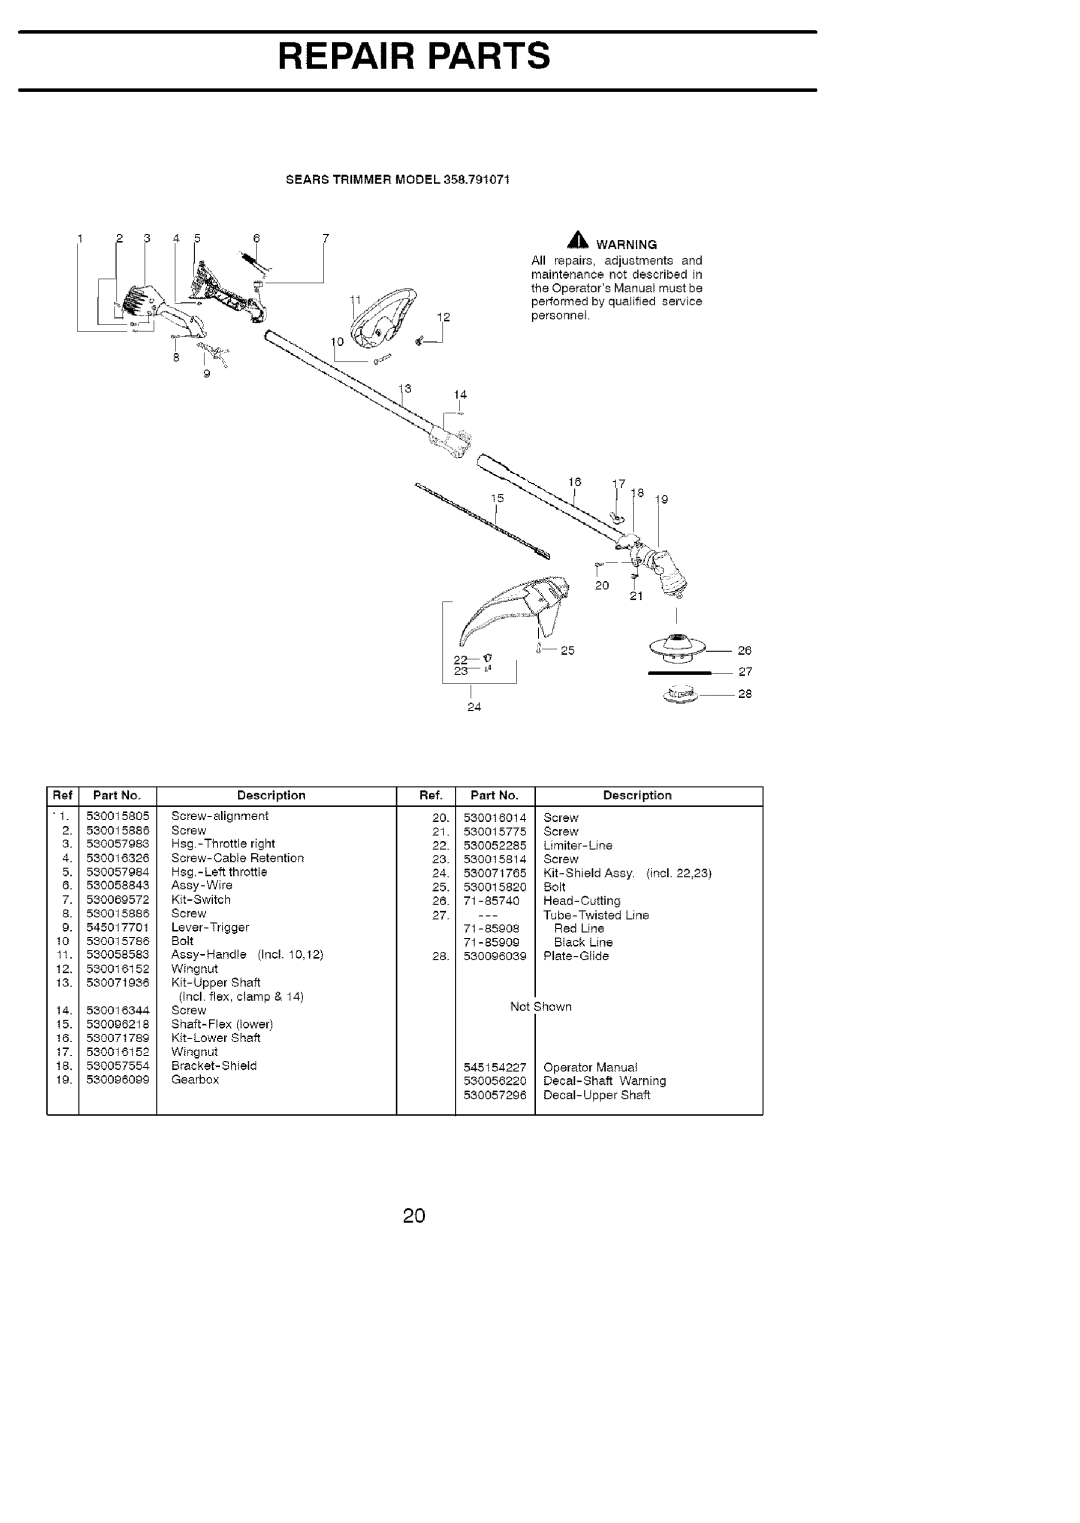 Craftsman 358.791071 operating instructions Repair Parts, Sears Trimmer Model, Part No, Description 